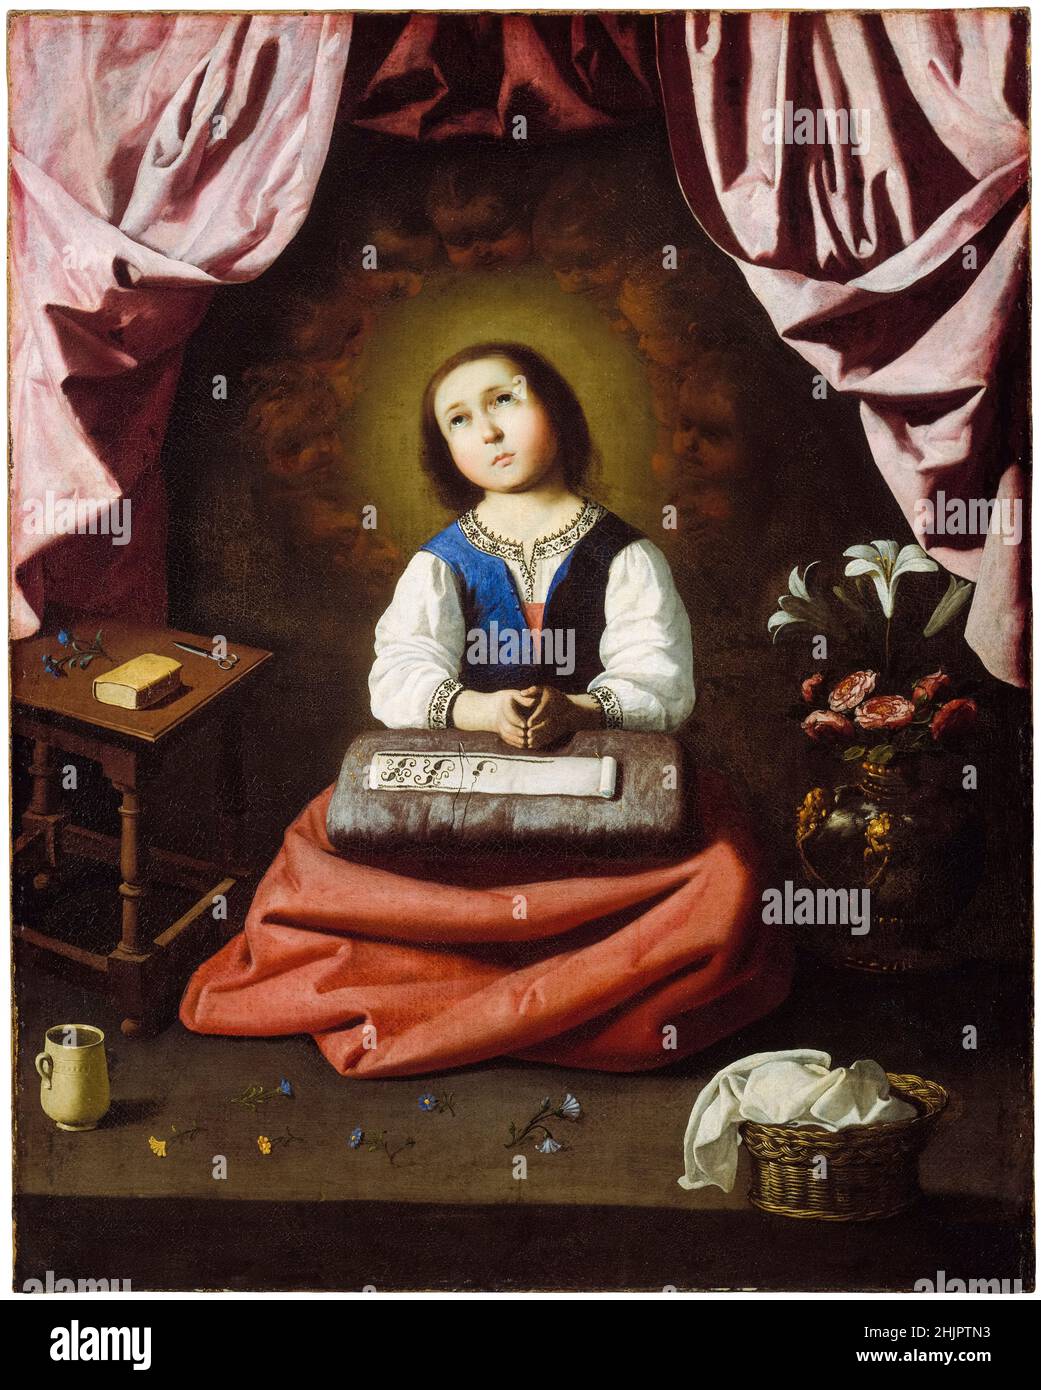 The Young Virgin, painting by Francisco de Zurbarán, 1632-1633 Stock Photo